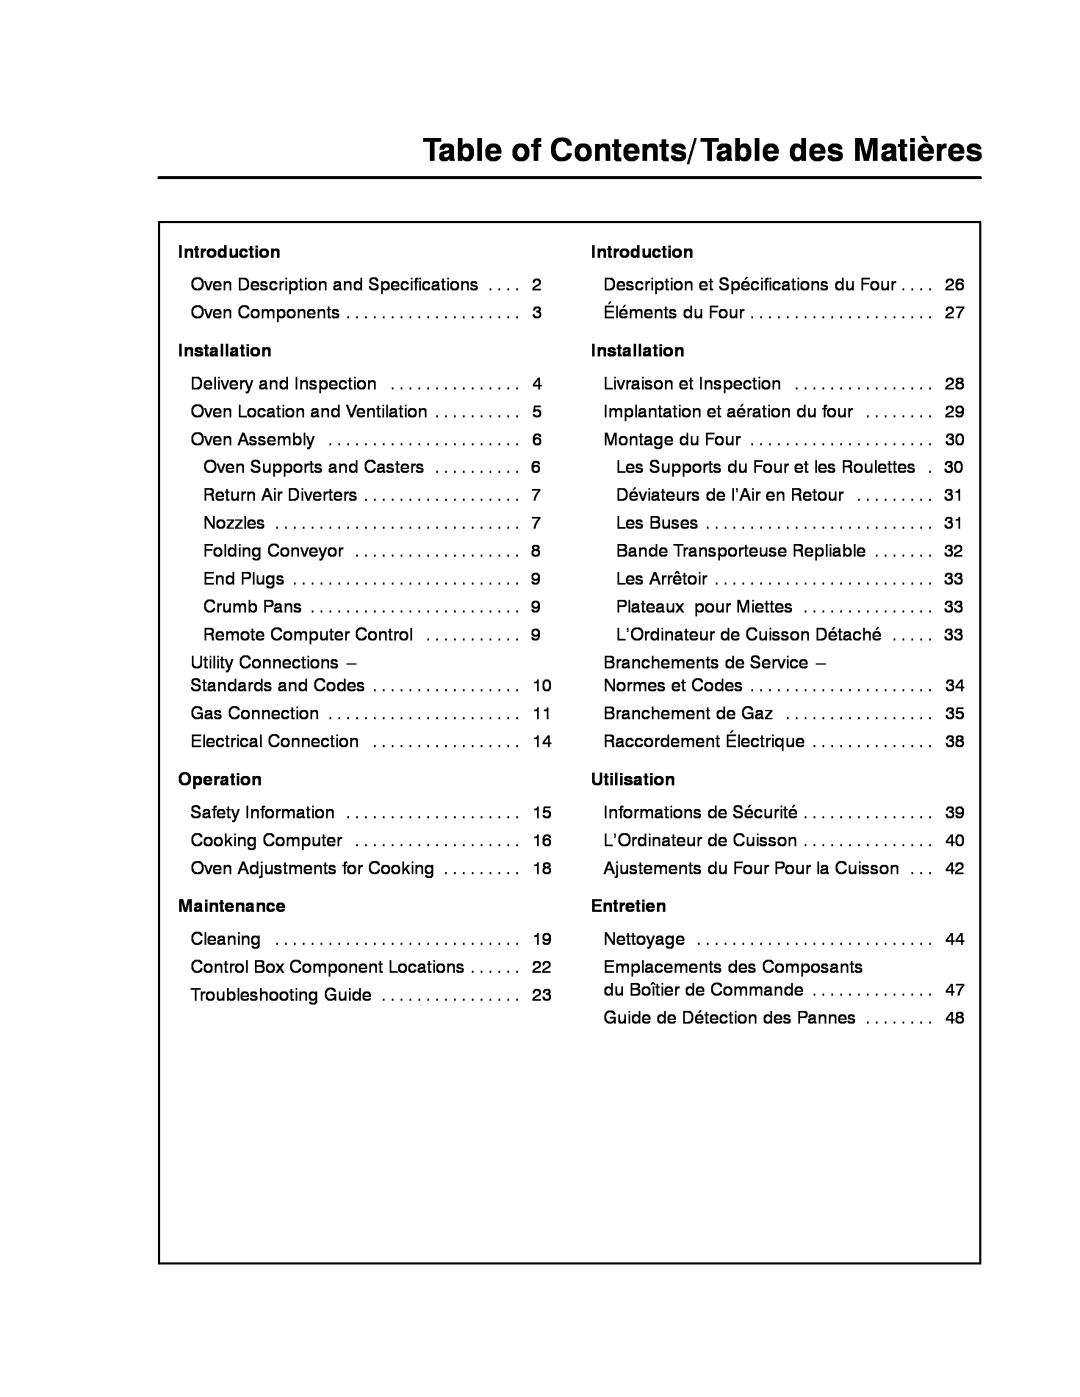 Blodgett MT3855G-G Table of Contents/Table des Matières, Introduction, Installation, Operation, Utilisation, Maintenance 